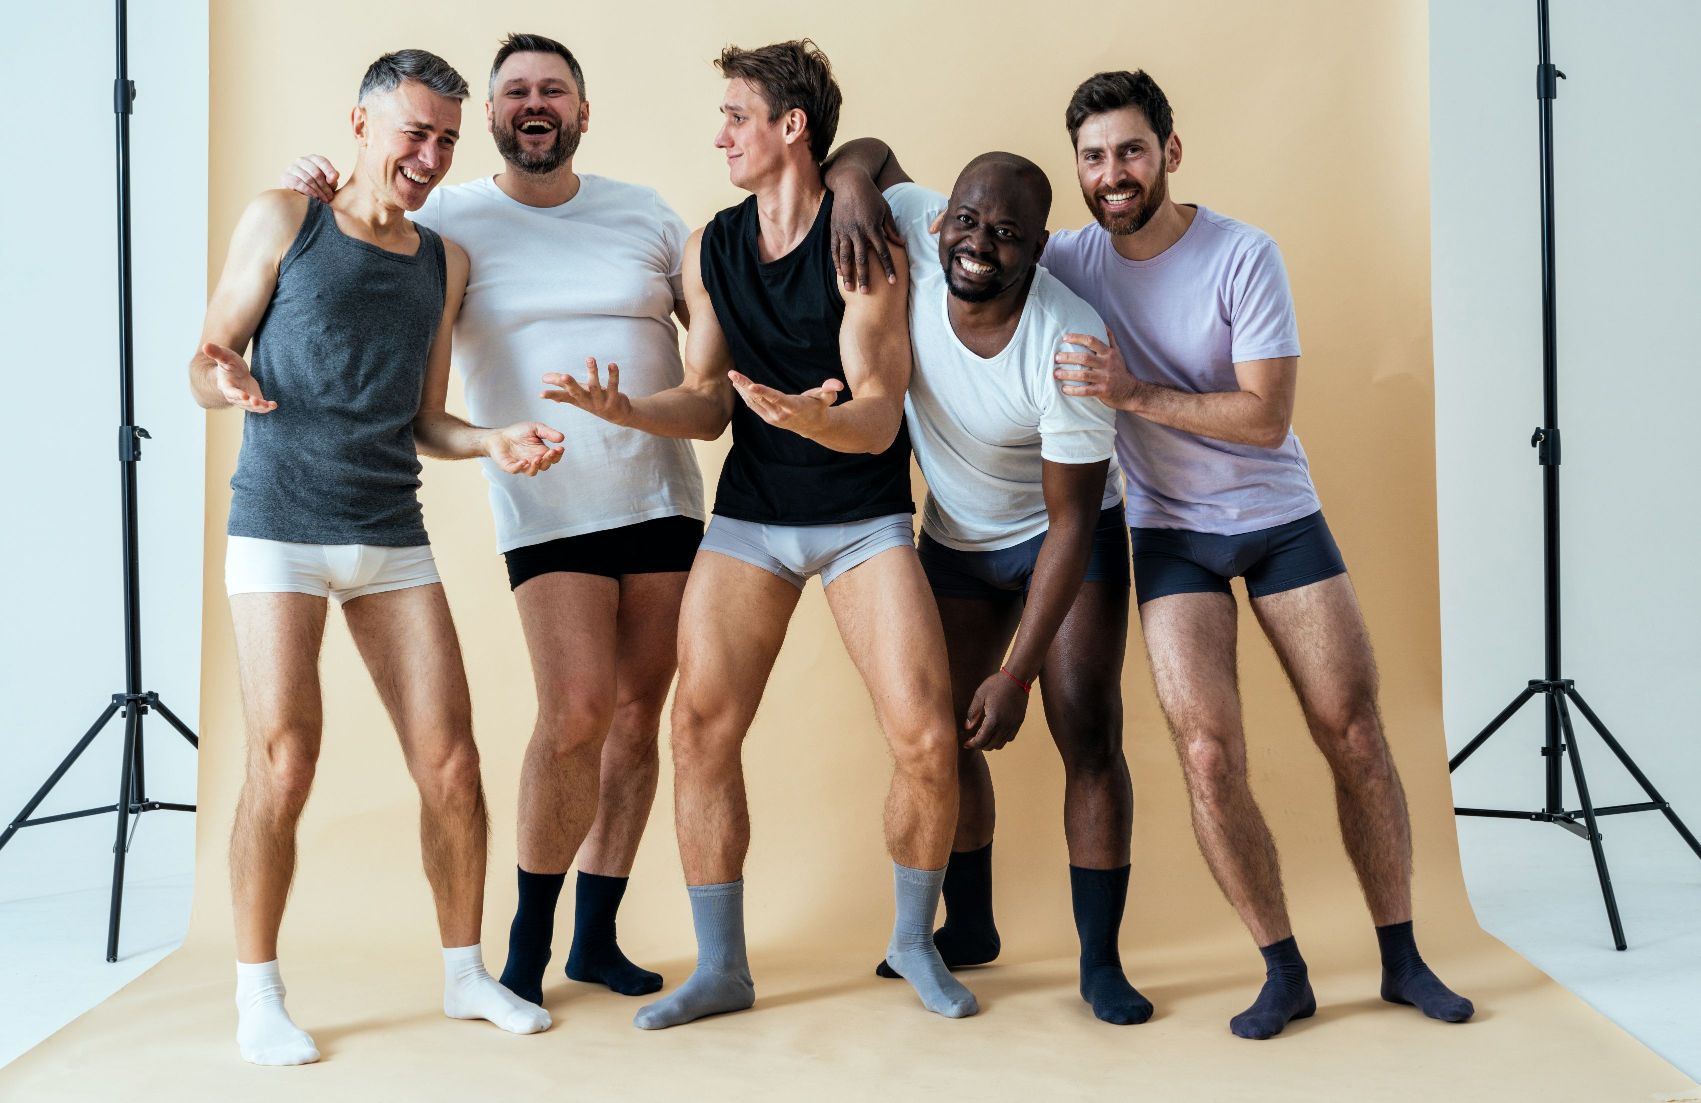 Bunch of men posing in underwear